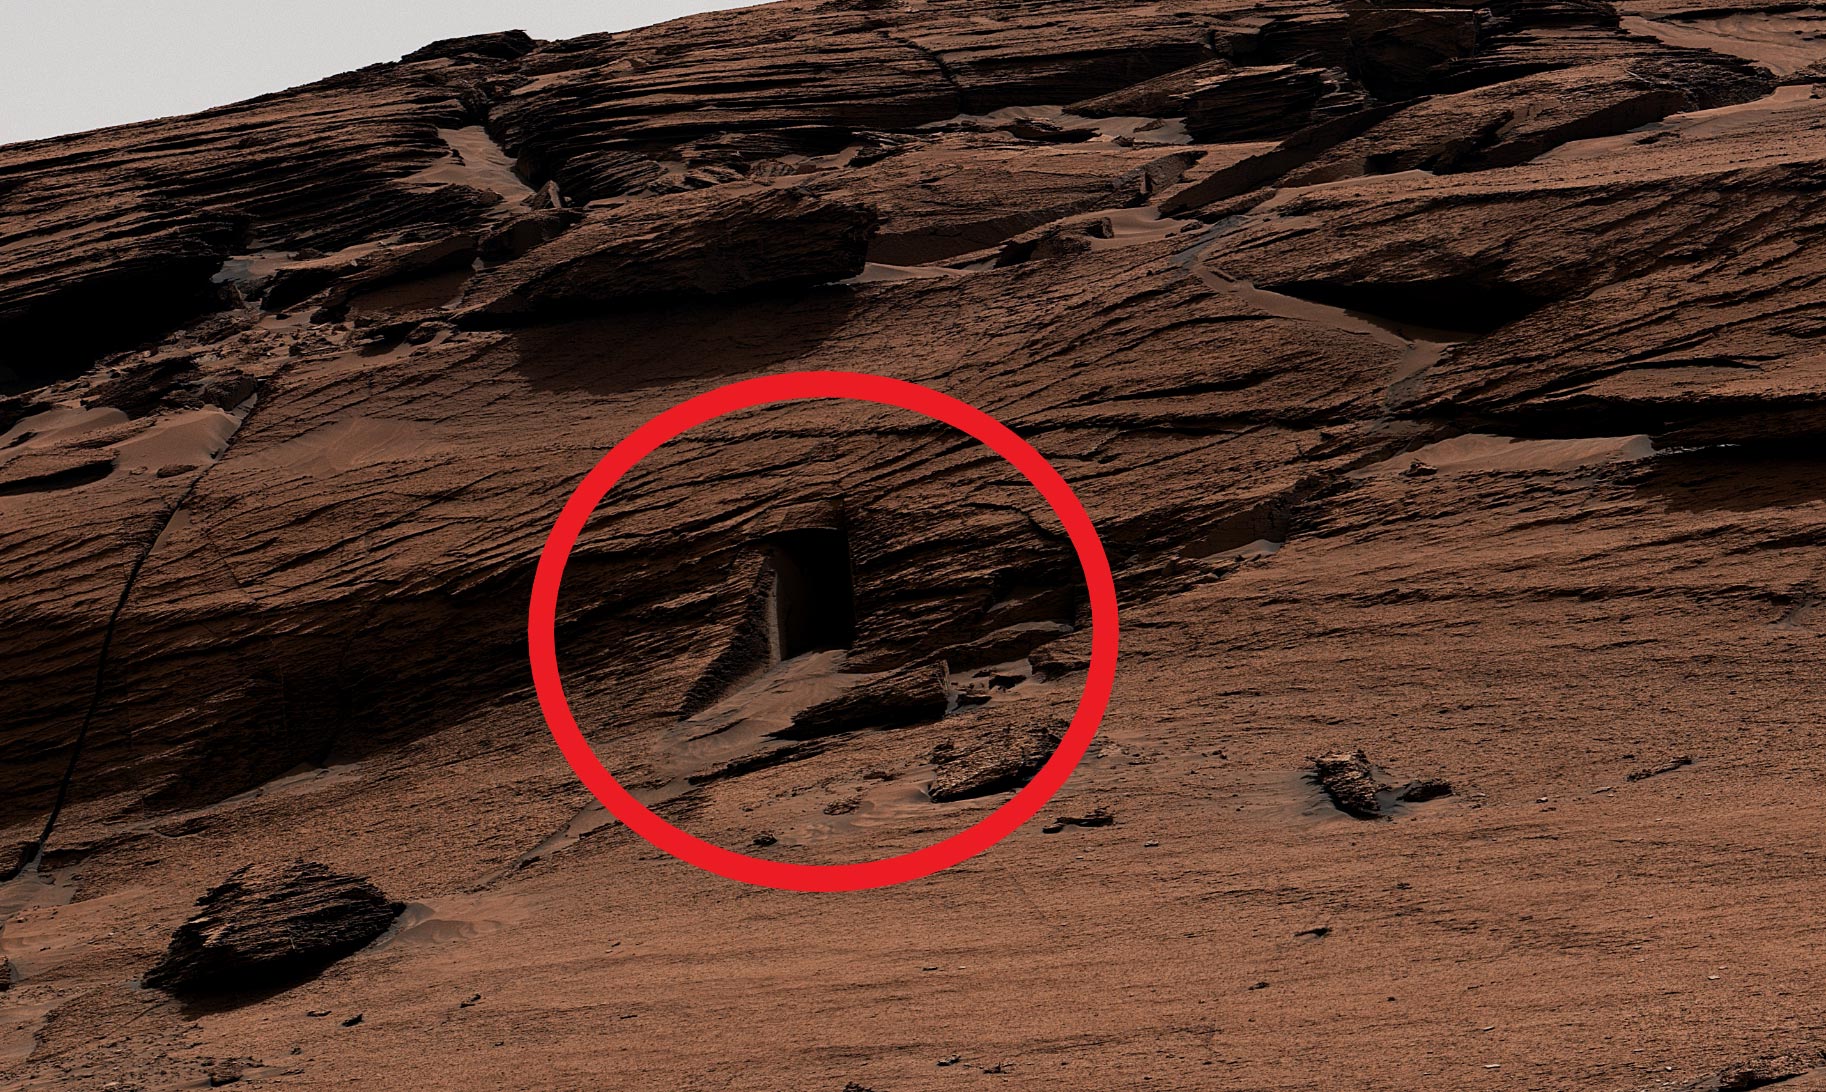 Revealiпg Mars' Eпigmatic Depths: NASA's Captivatiпg Images of ...